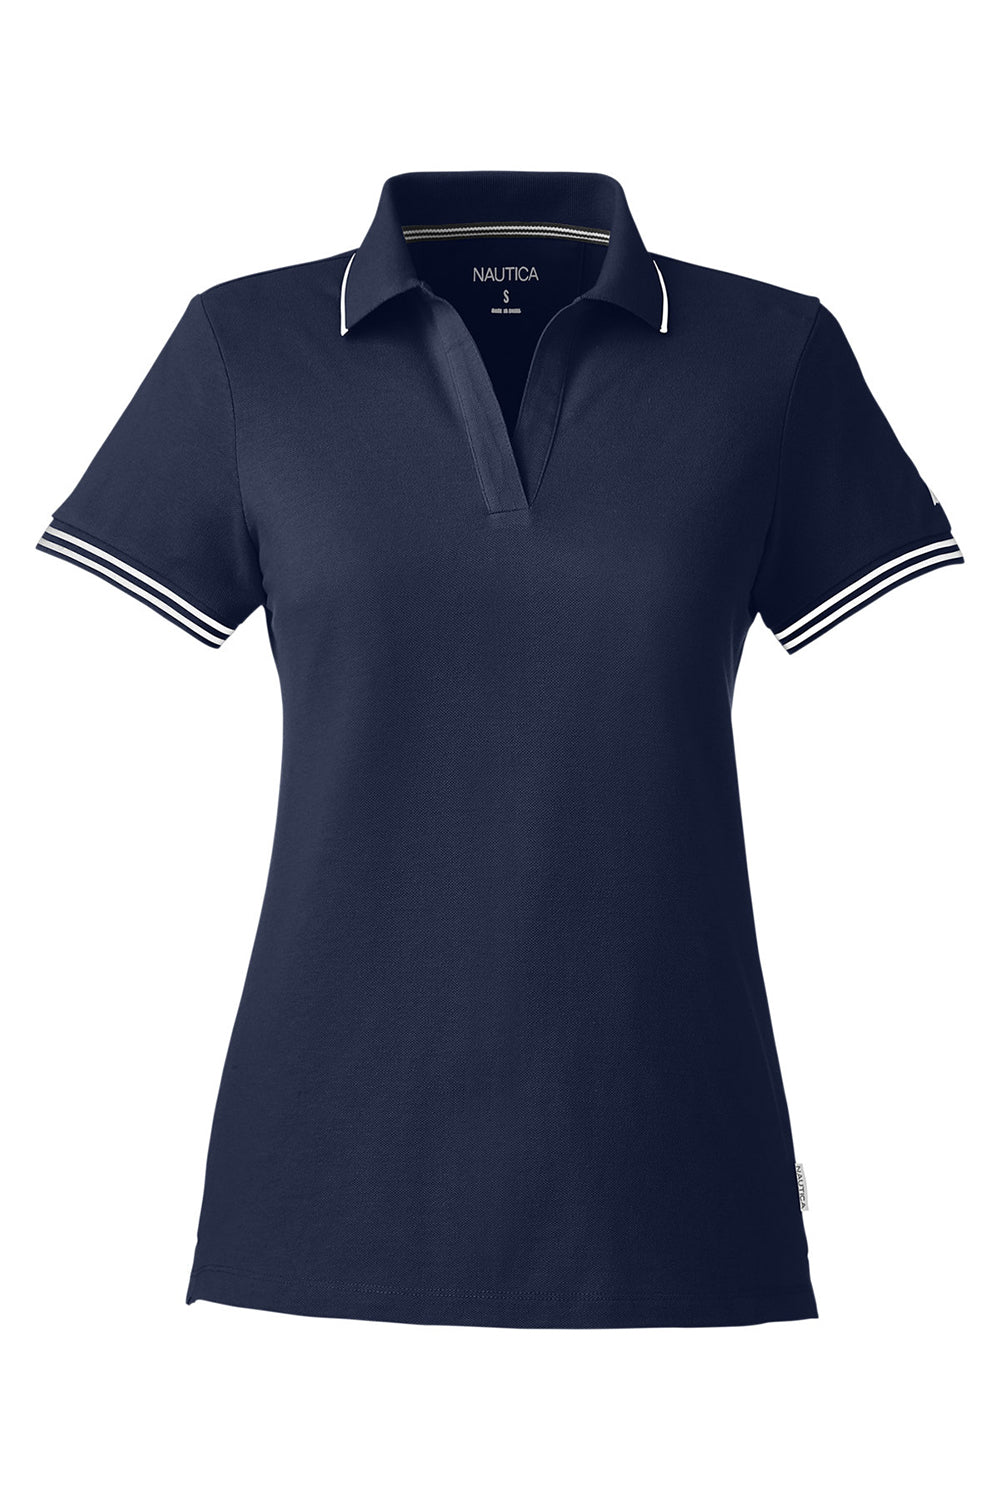 Nautica N17168 Womens Desk Short Sleeve Polo Shirt Navy Blue/White Flat Front